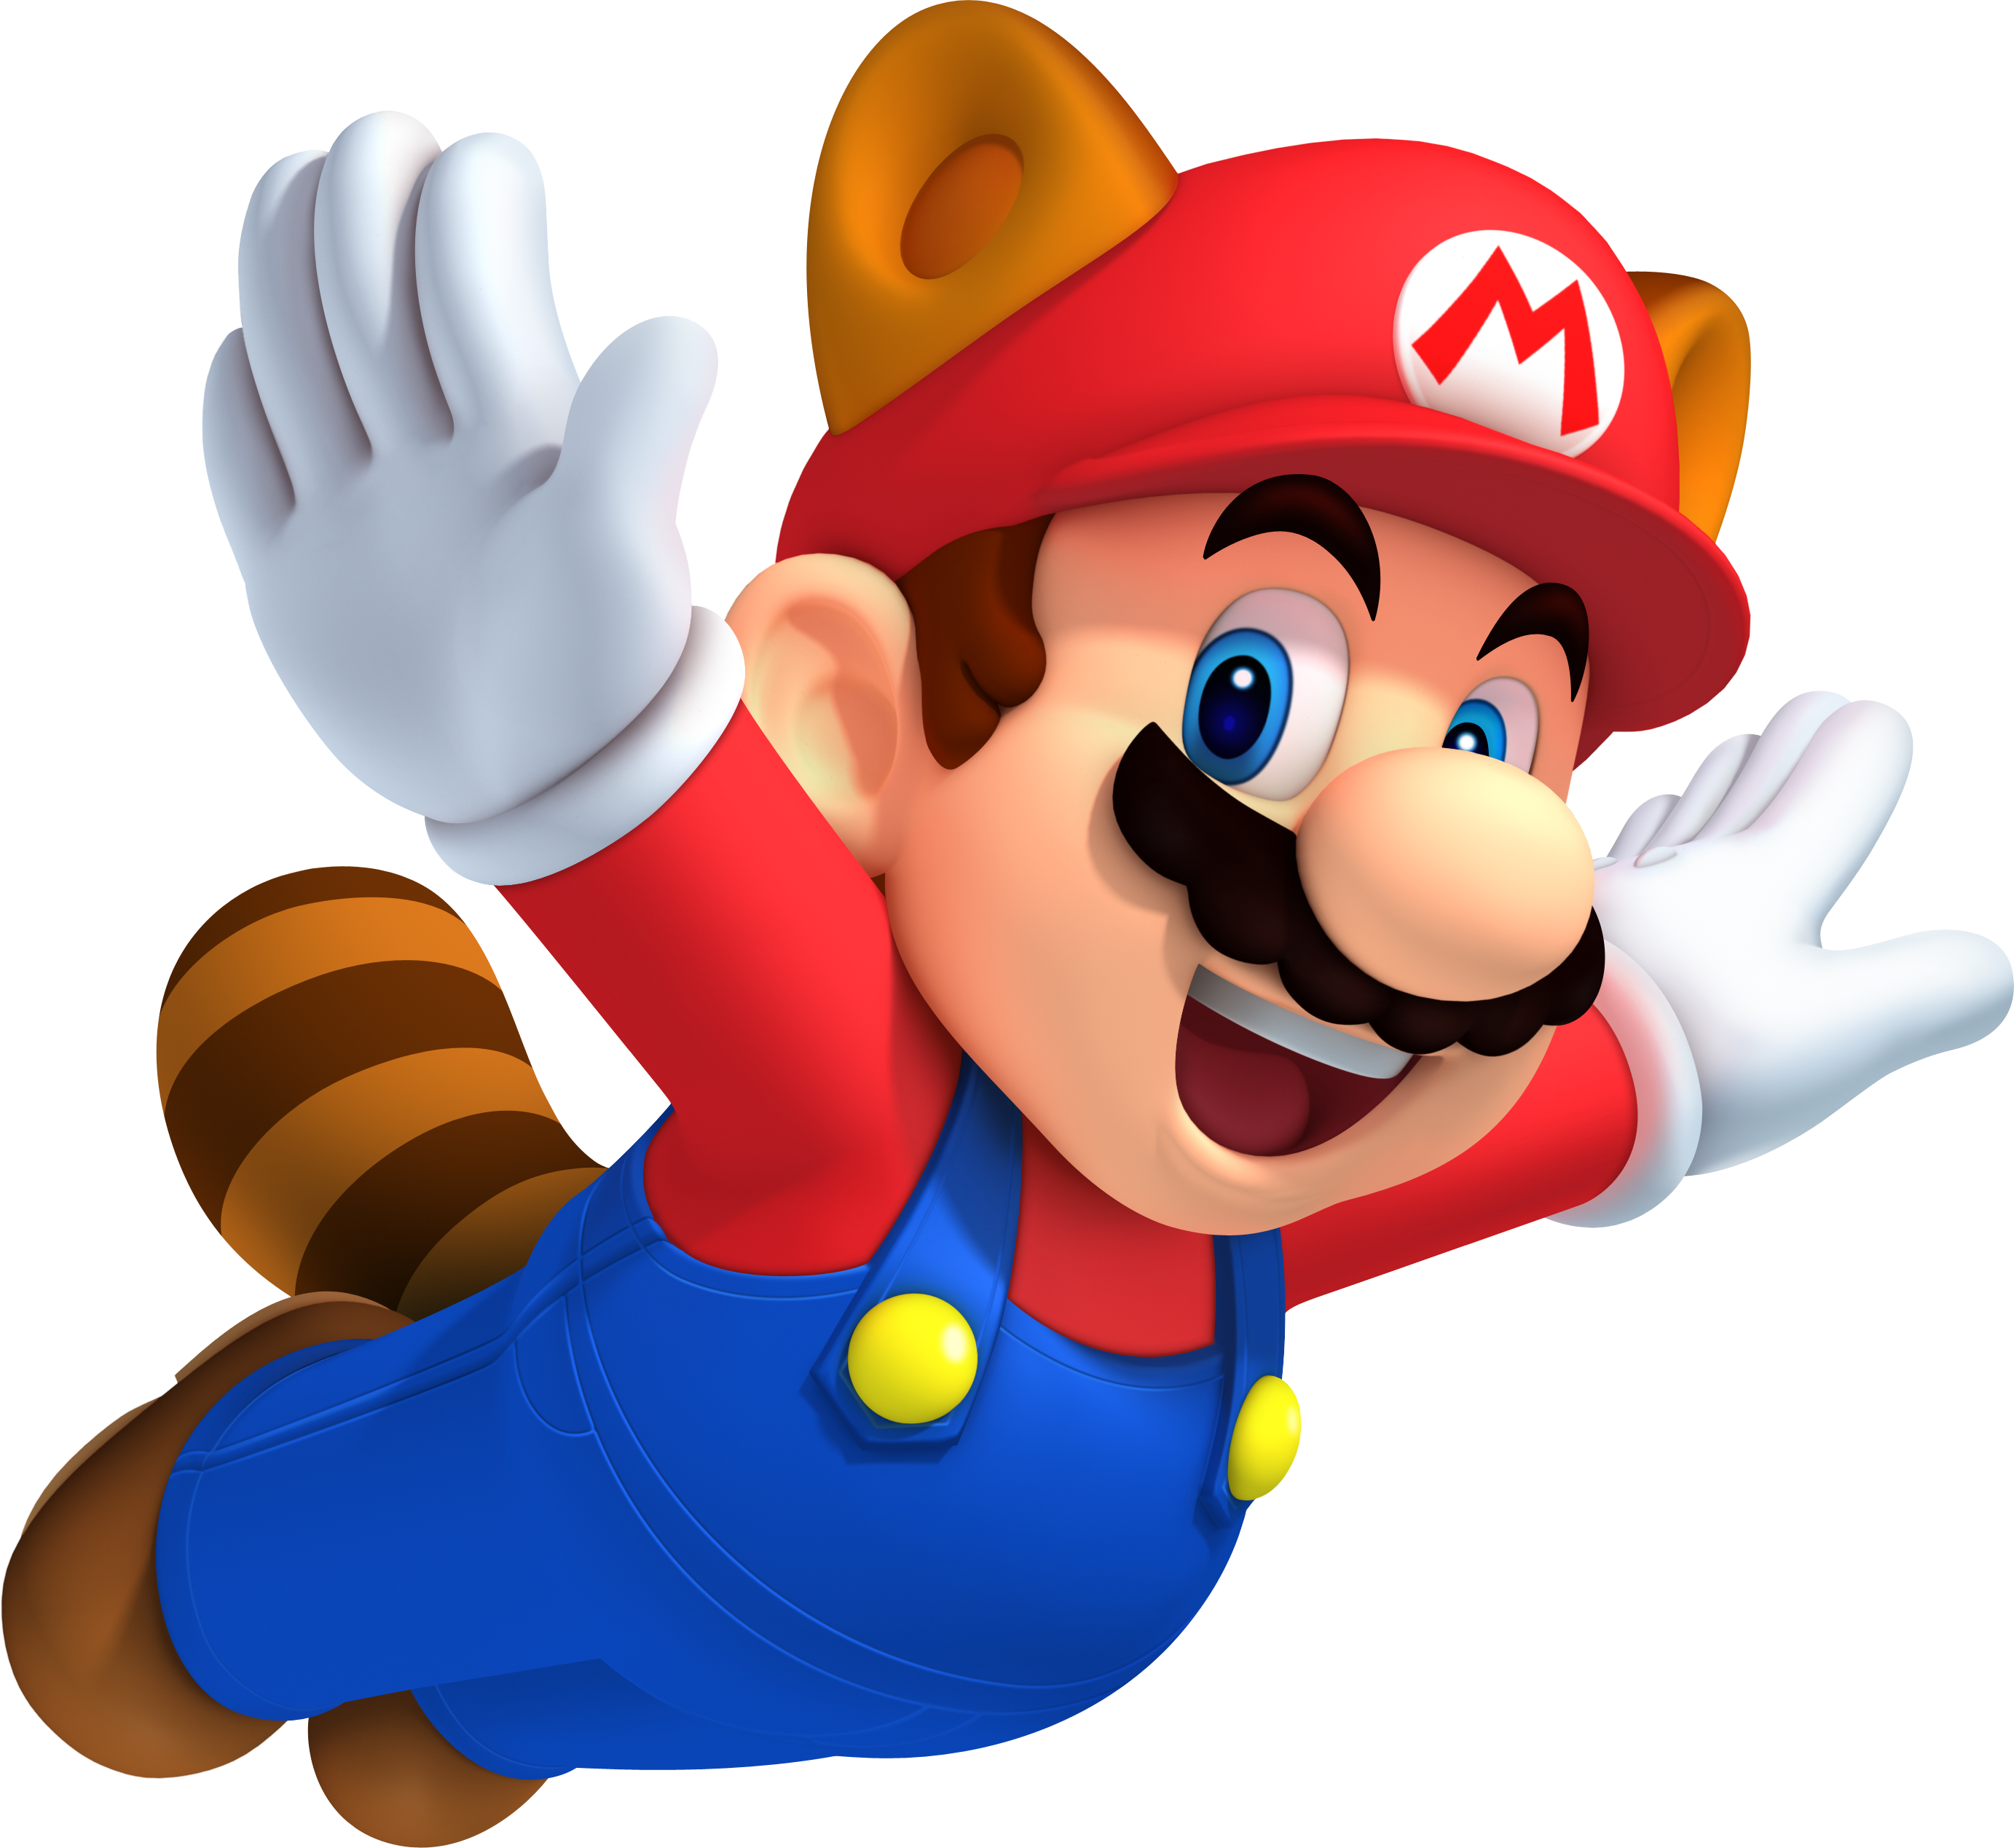 Nintendo Super Mario Flying Drone Raton Laveur Raton Laveur